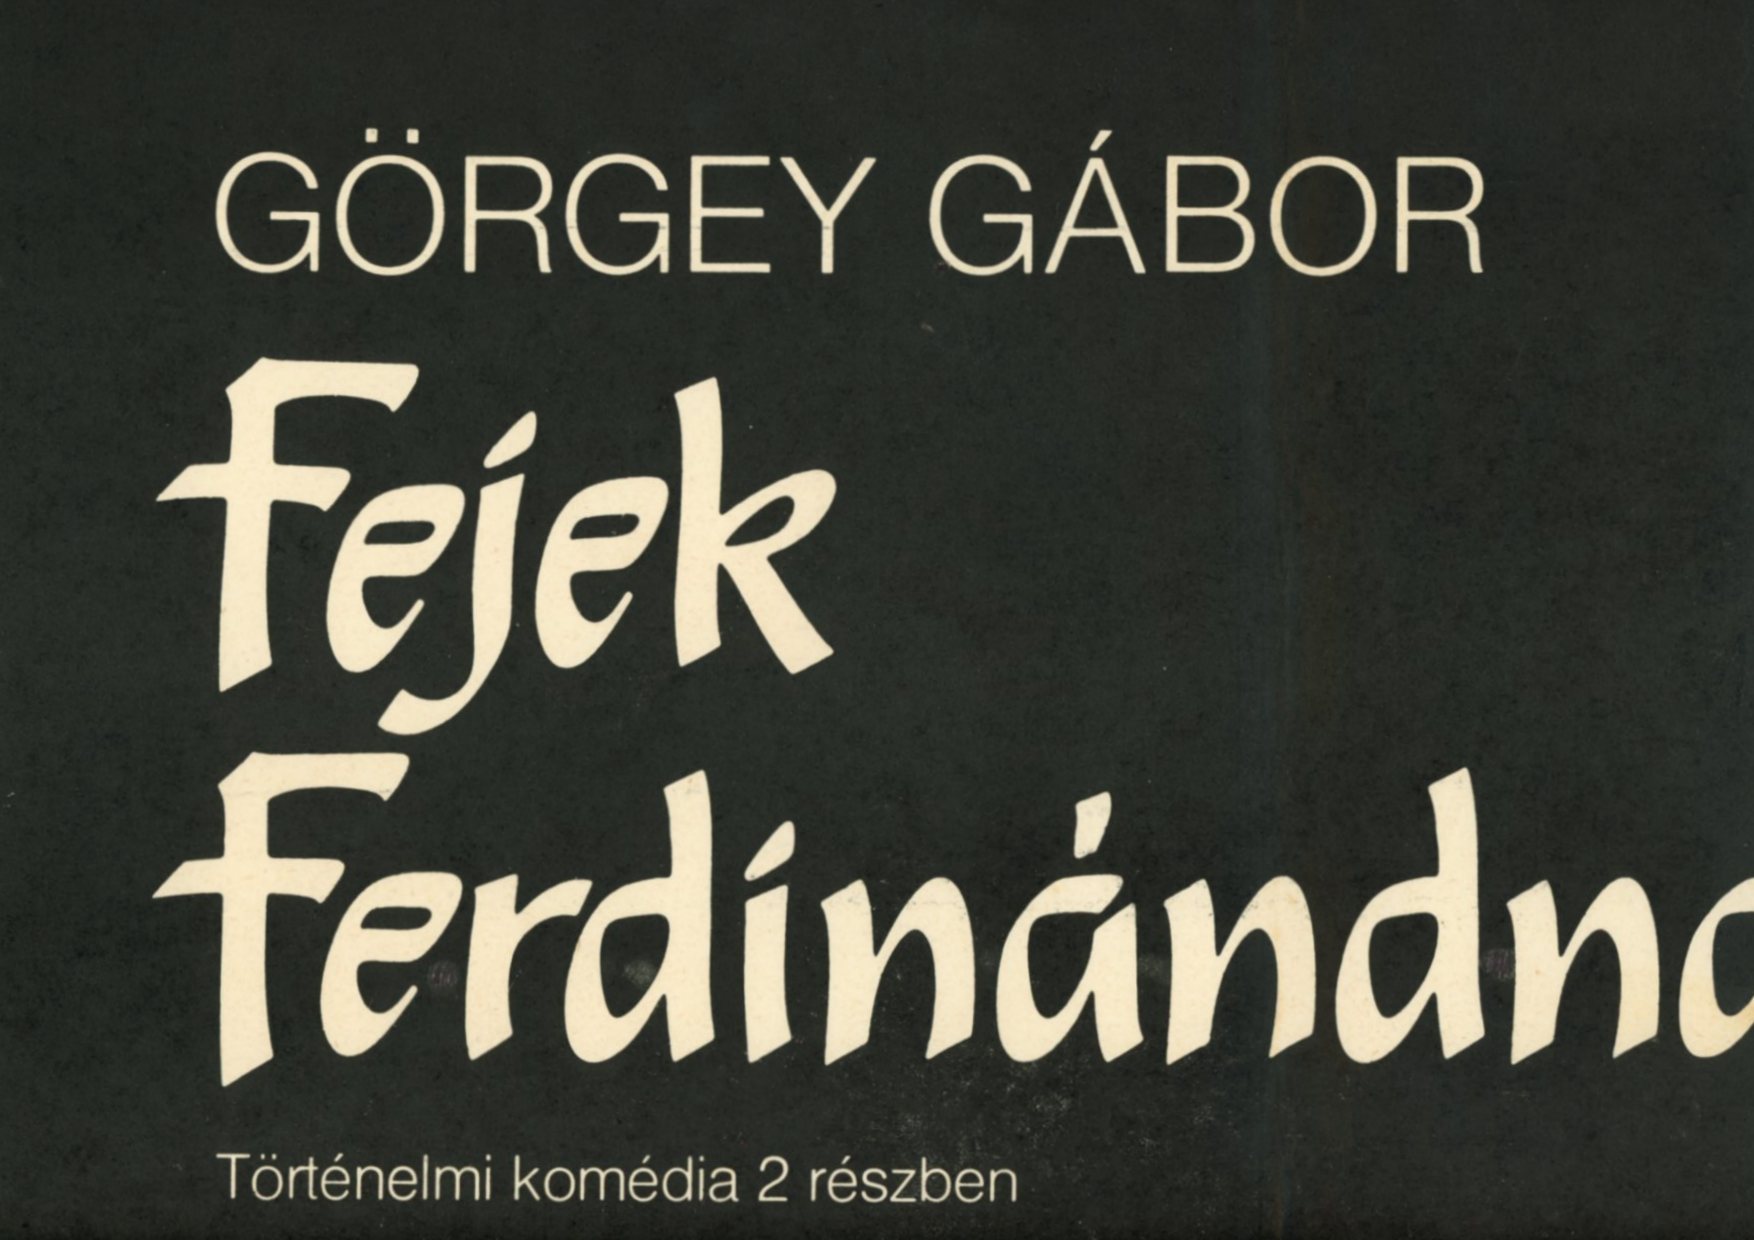 Plakát (Erkel Ferenc Múzeum CC BY-NC-SA)